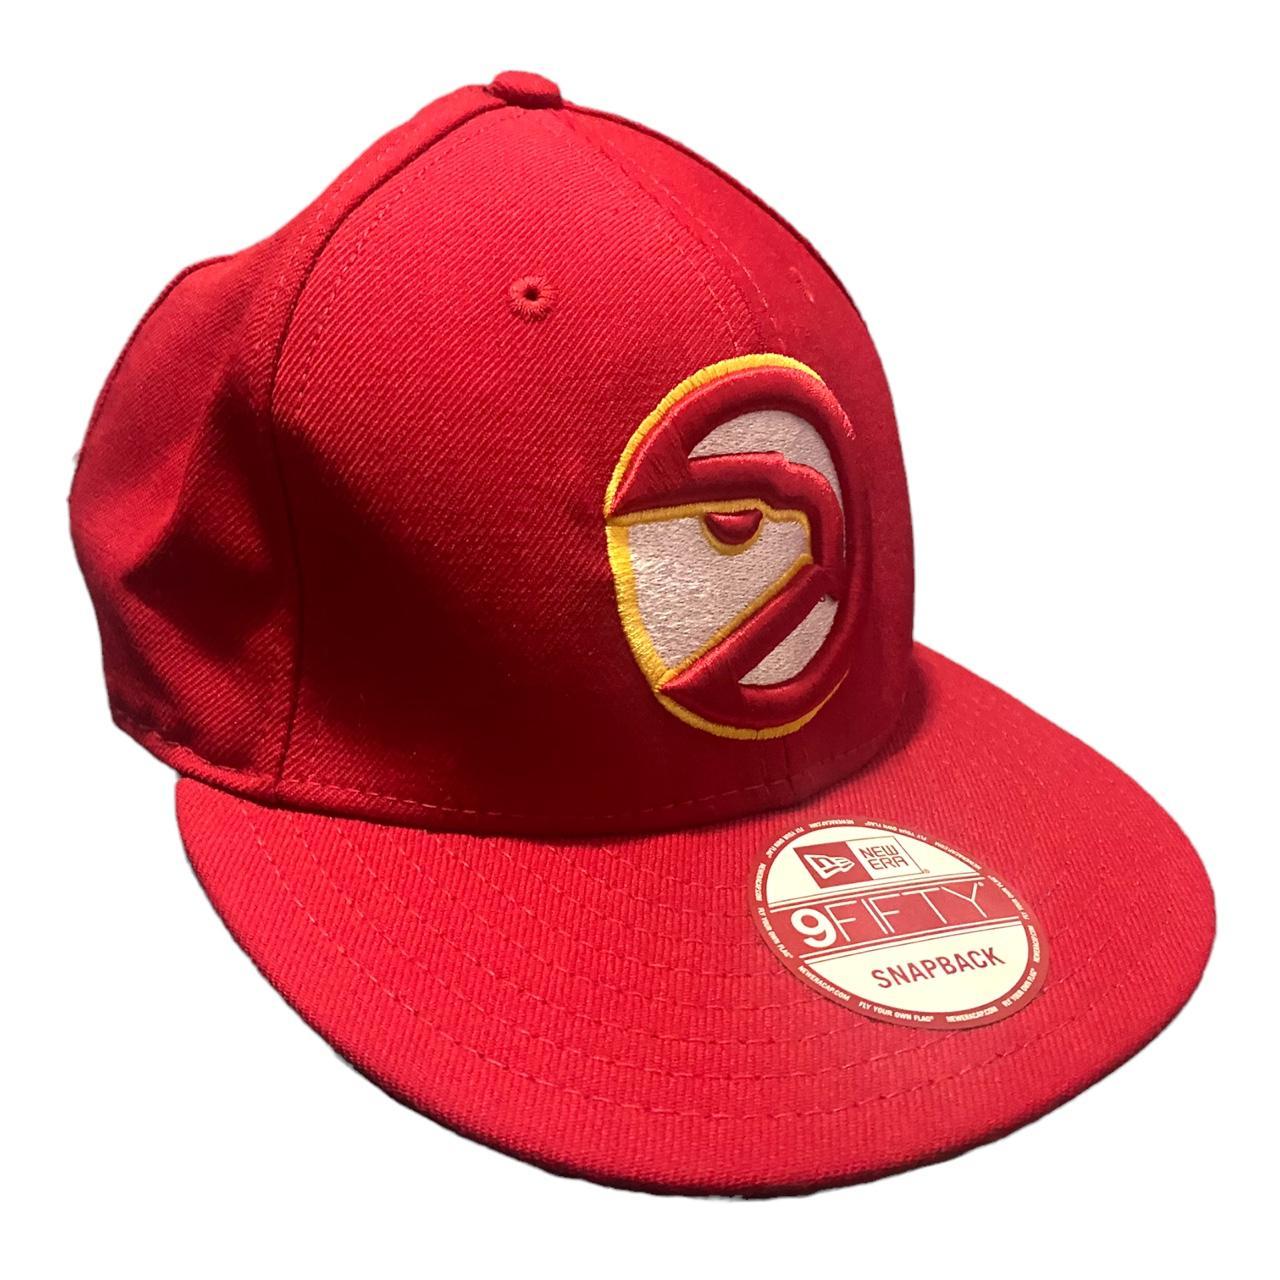 Atlanta Hawks Men's New Era 9Fifty Snapback Hat